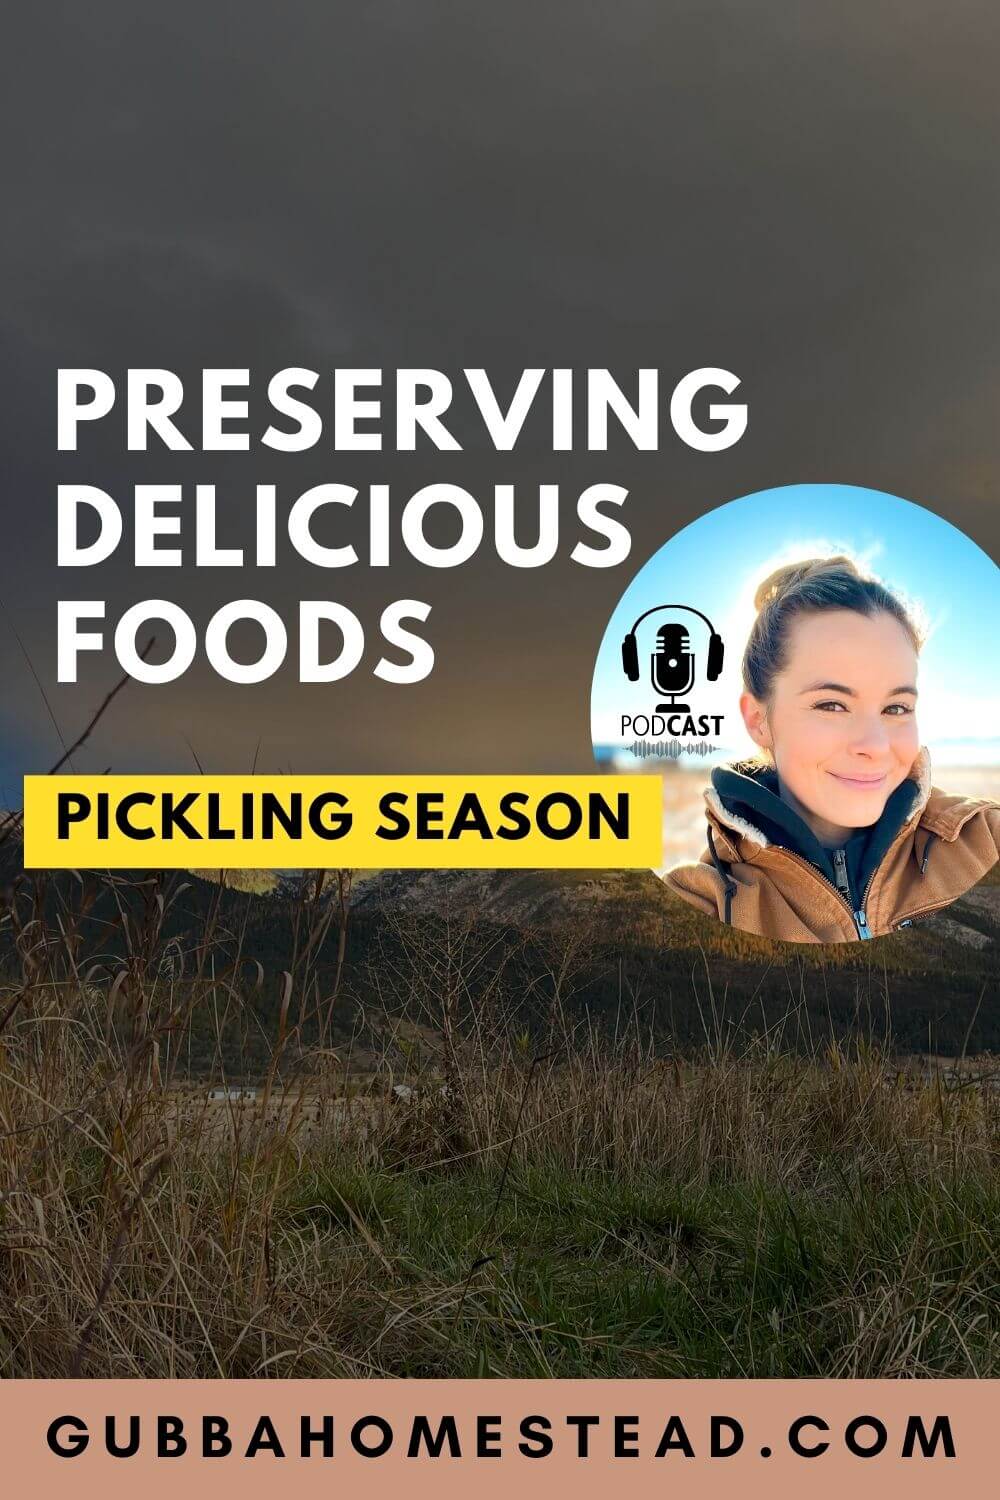 It’s Pickling Season! Preserving Food